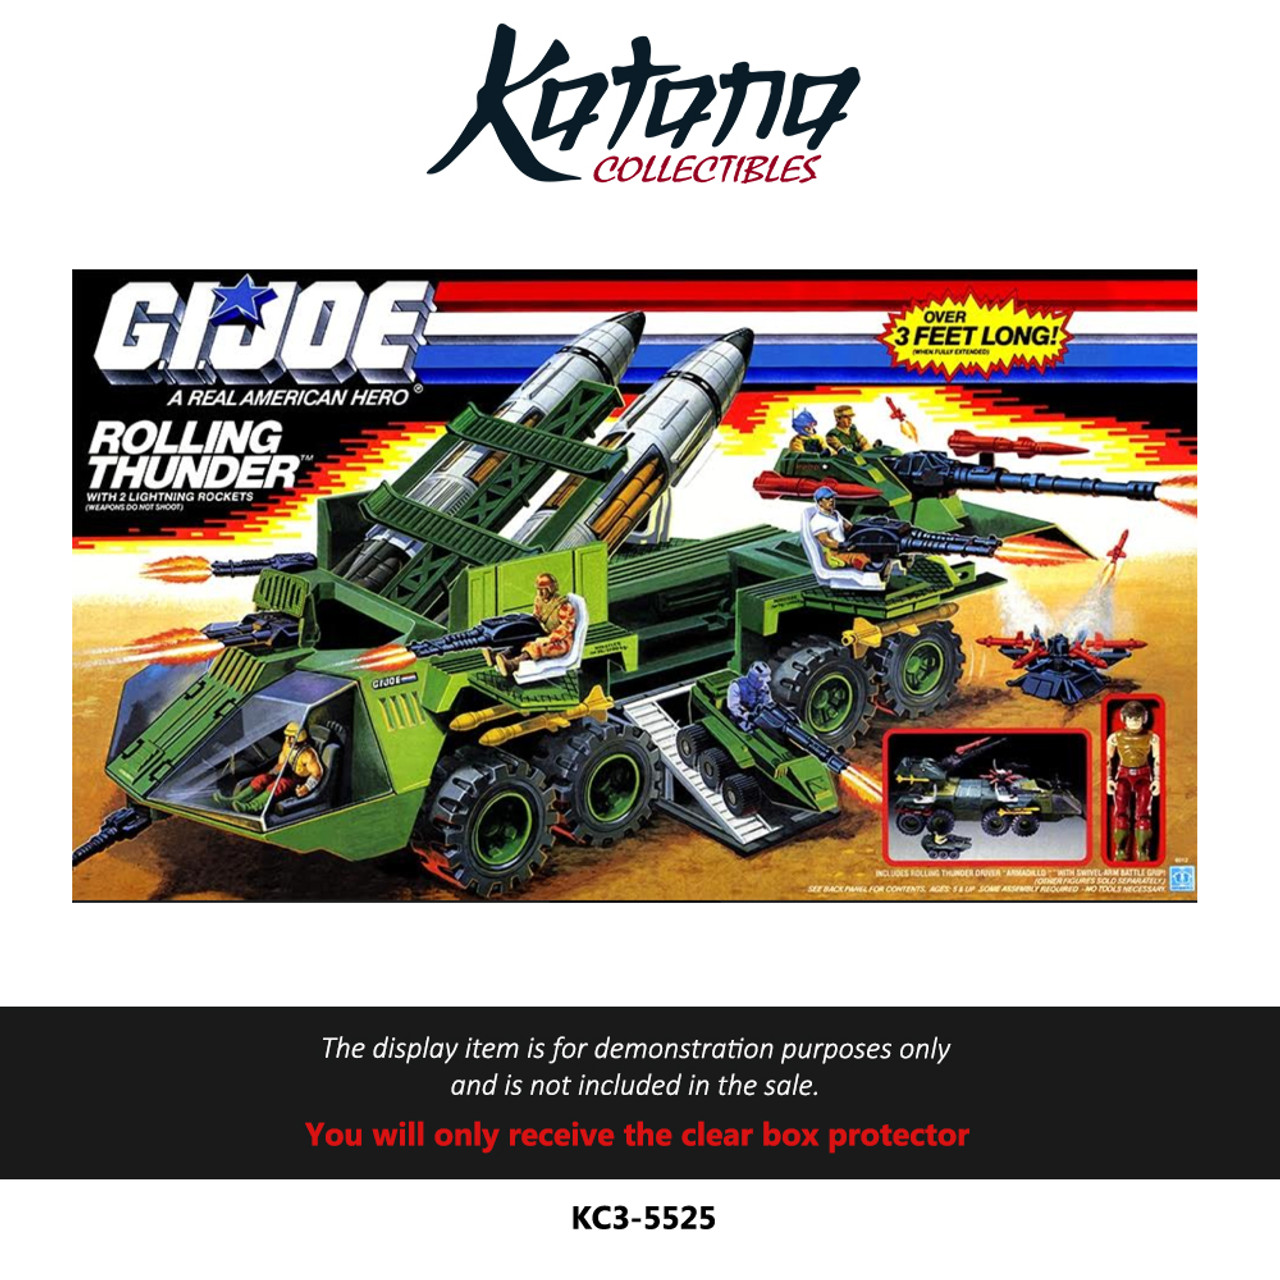 Katana Collectibles Protector For G.I. Joe: ROLLING THUNDER Vehicle